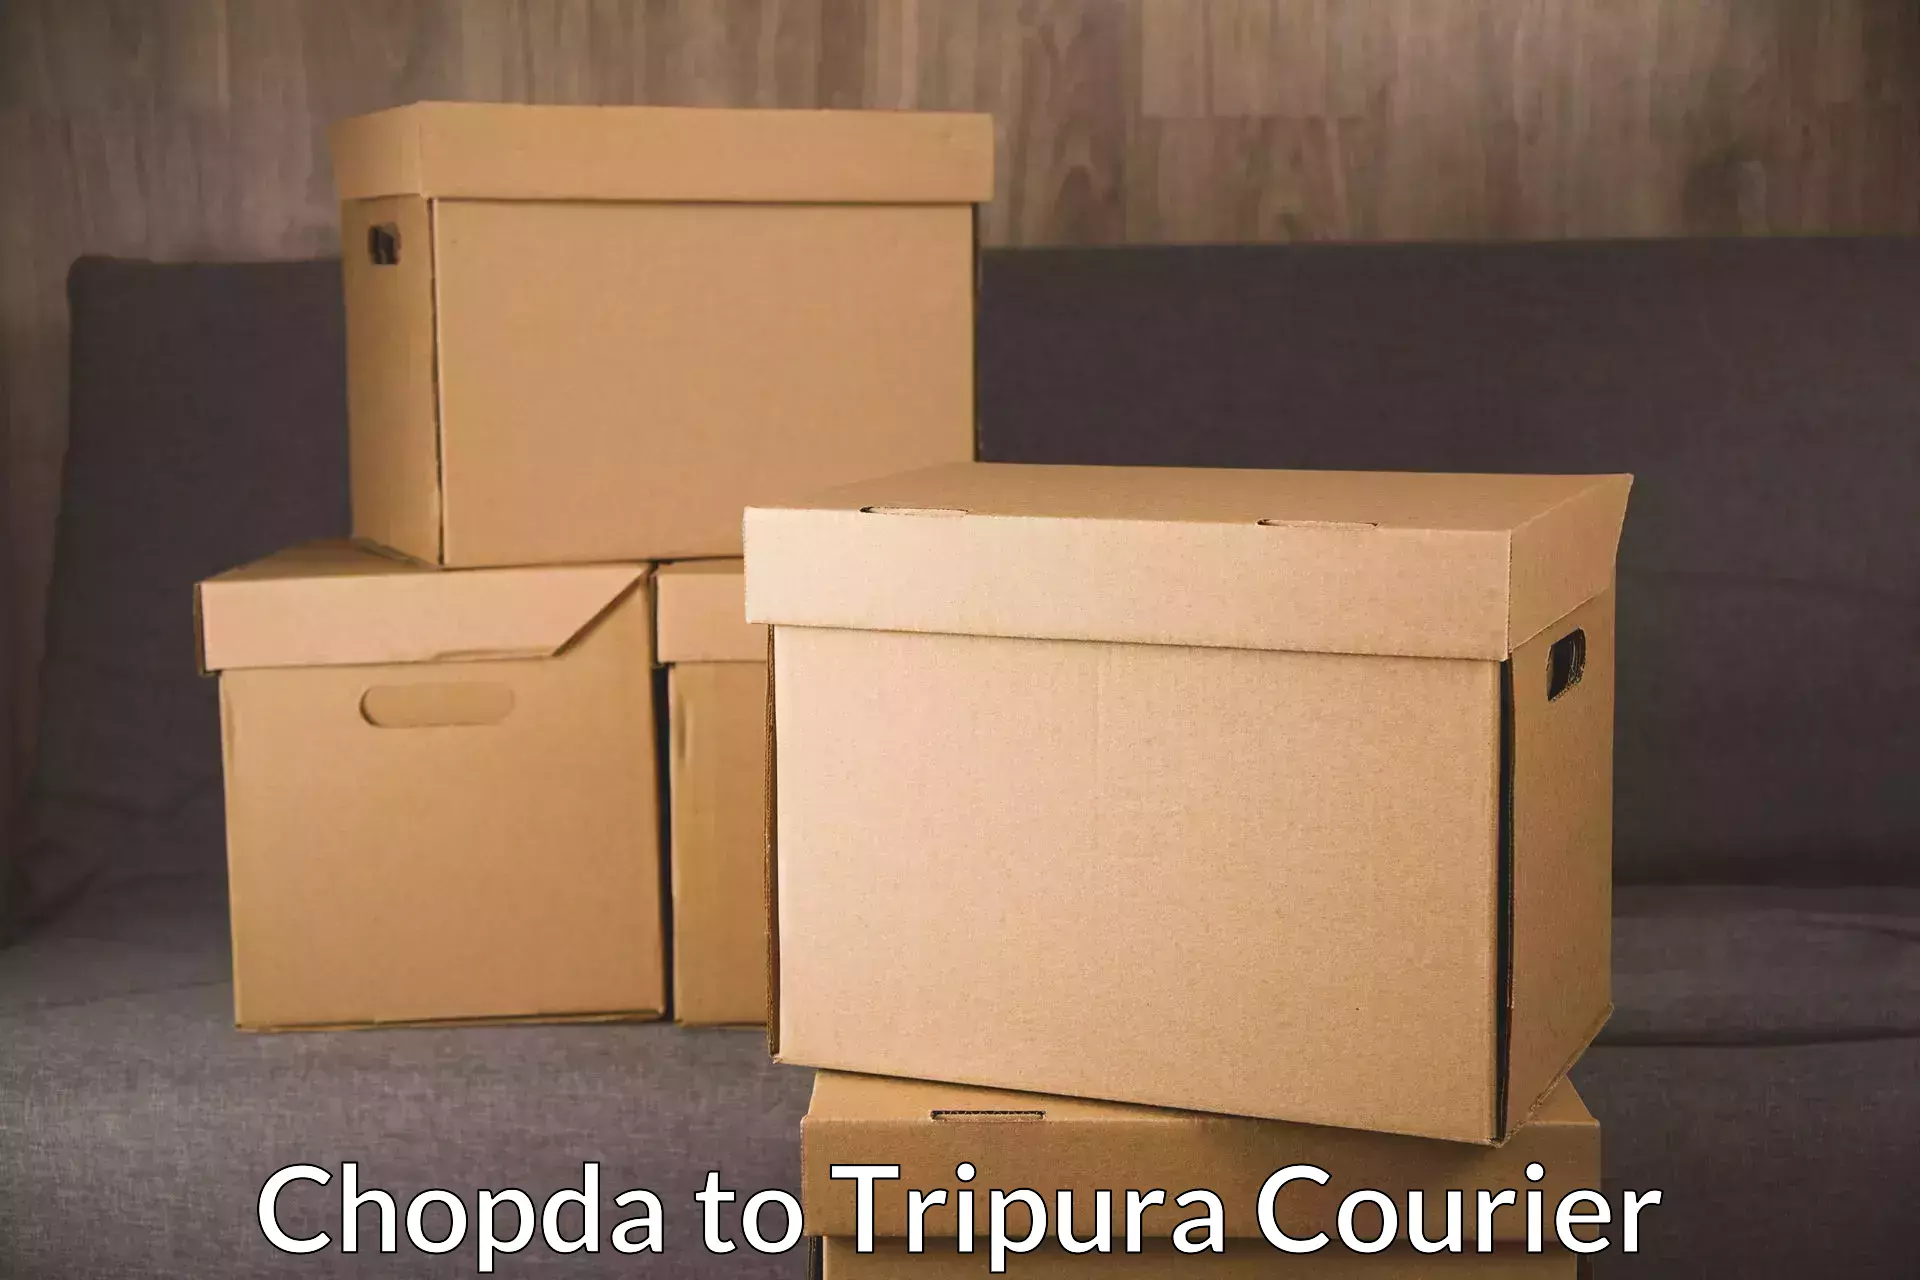 High-performance logistics Chopda to Tripura